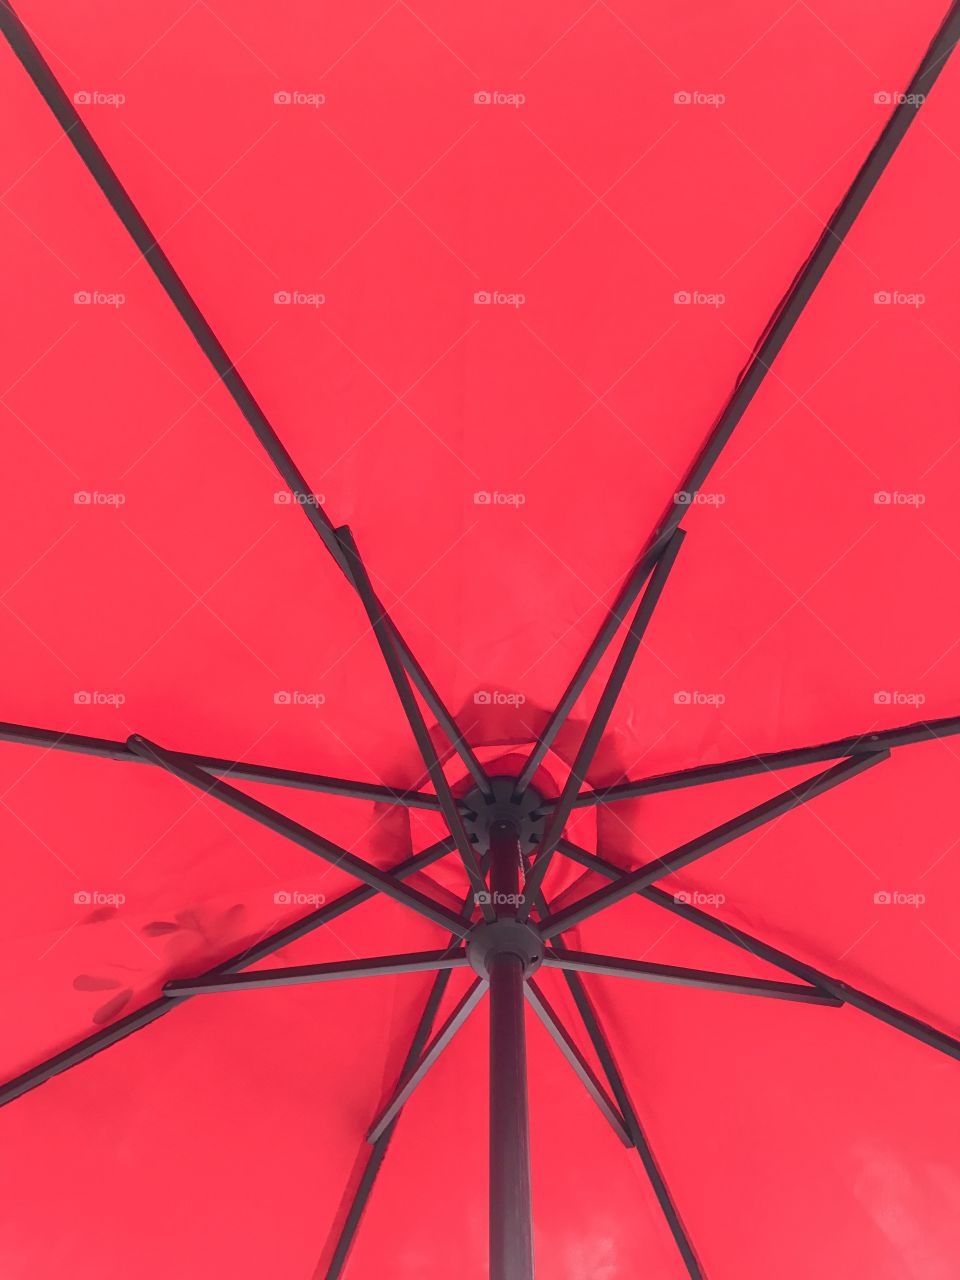 The umbrella 